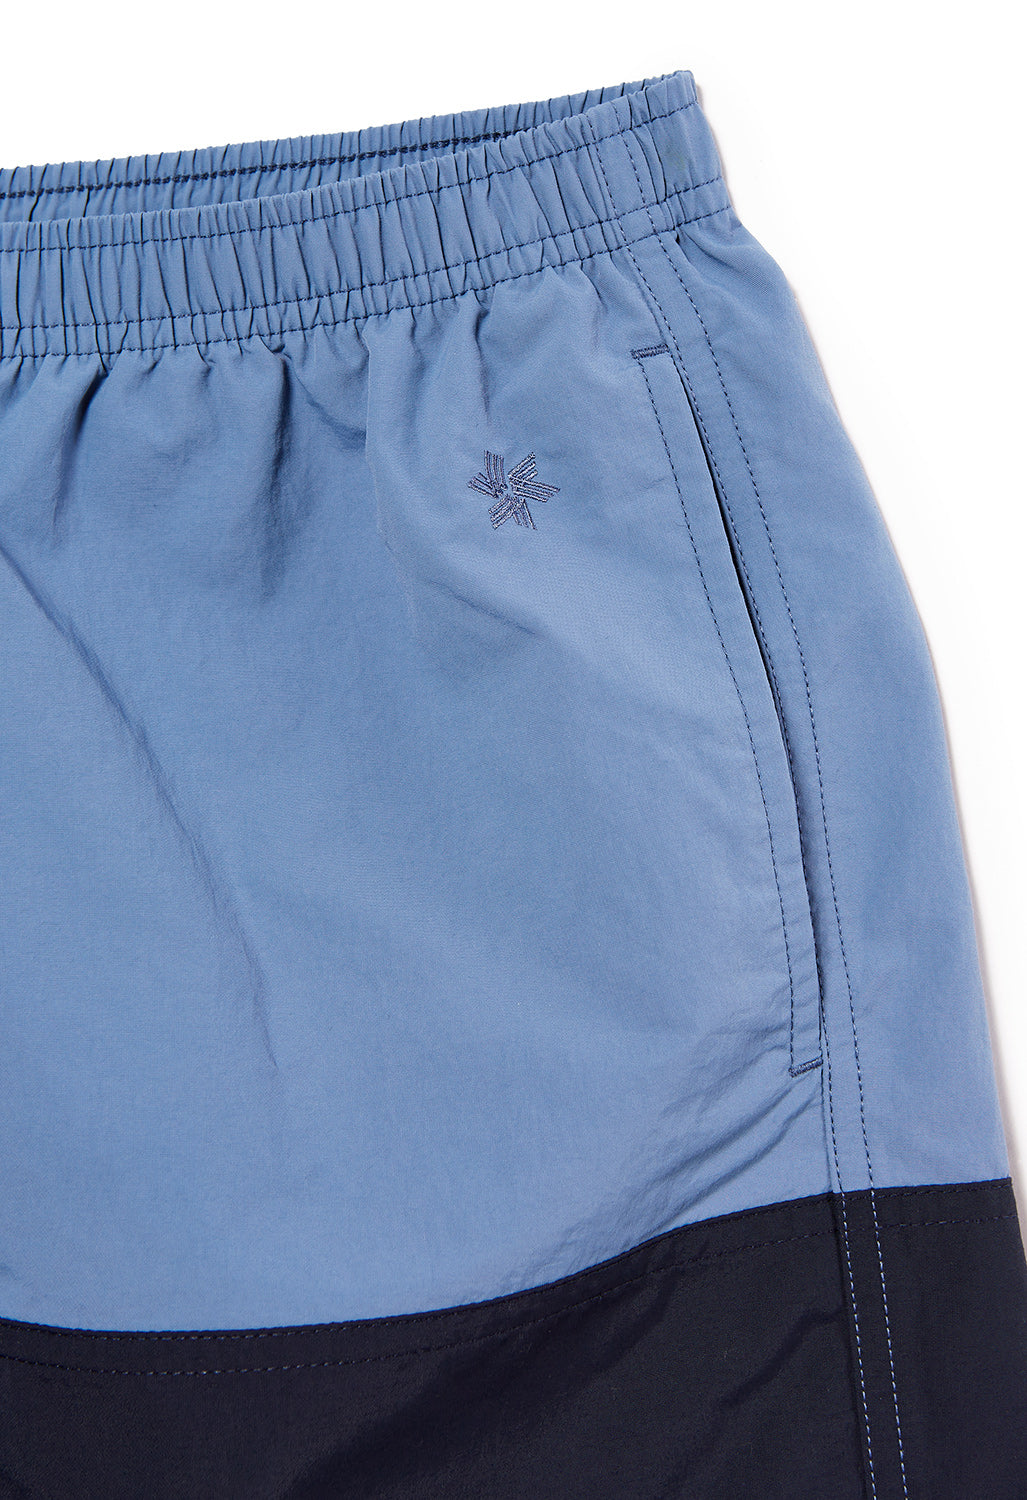 Goldwin Men's Nylon Bicolor Shorts 7" - Horizon Blue/Ink Navy